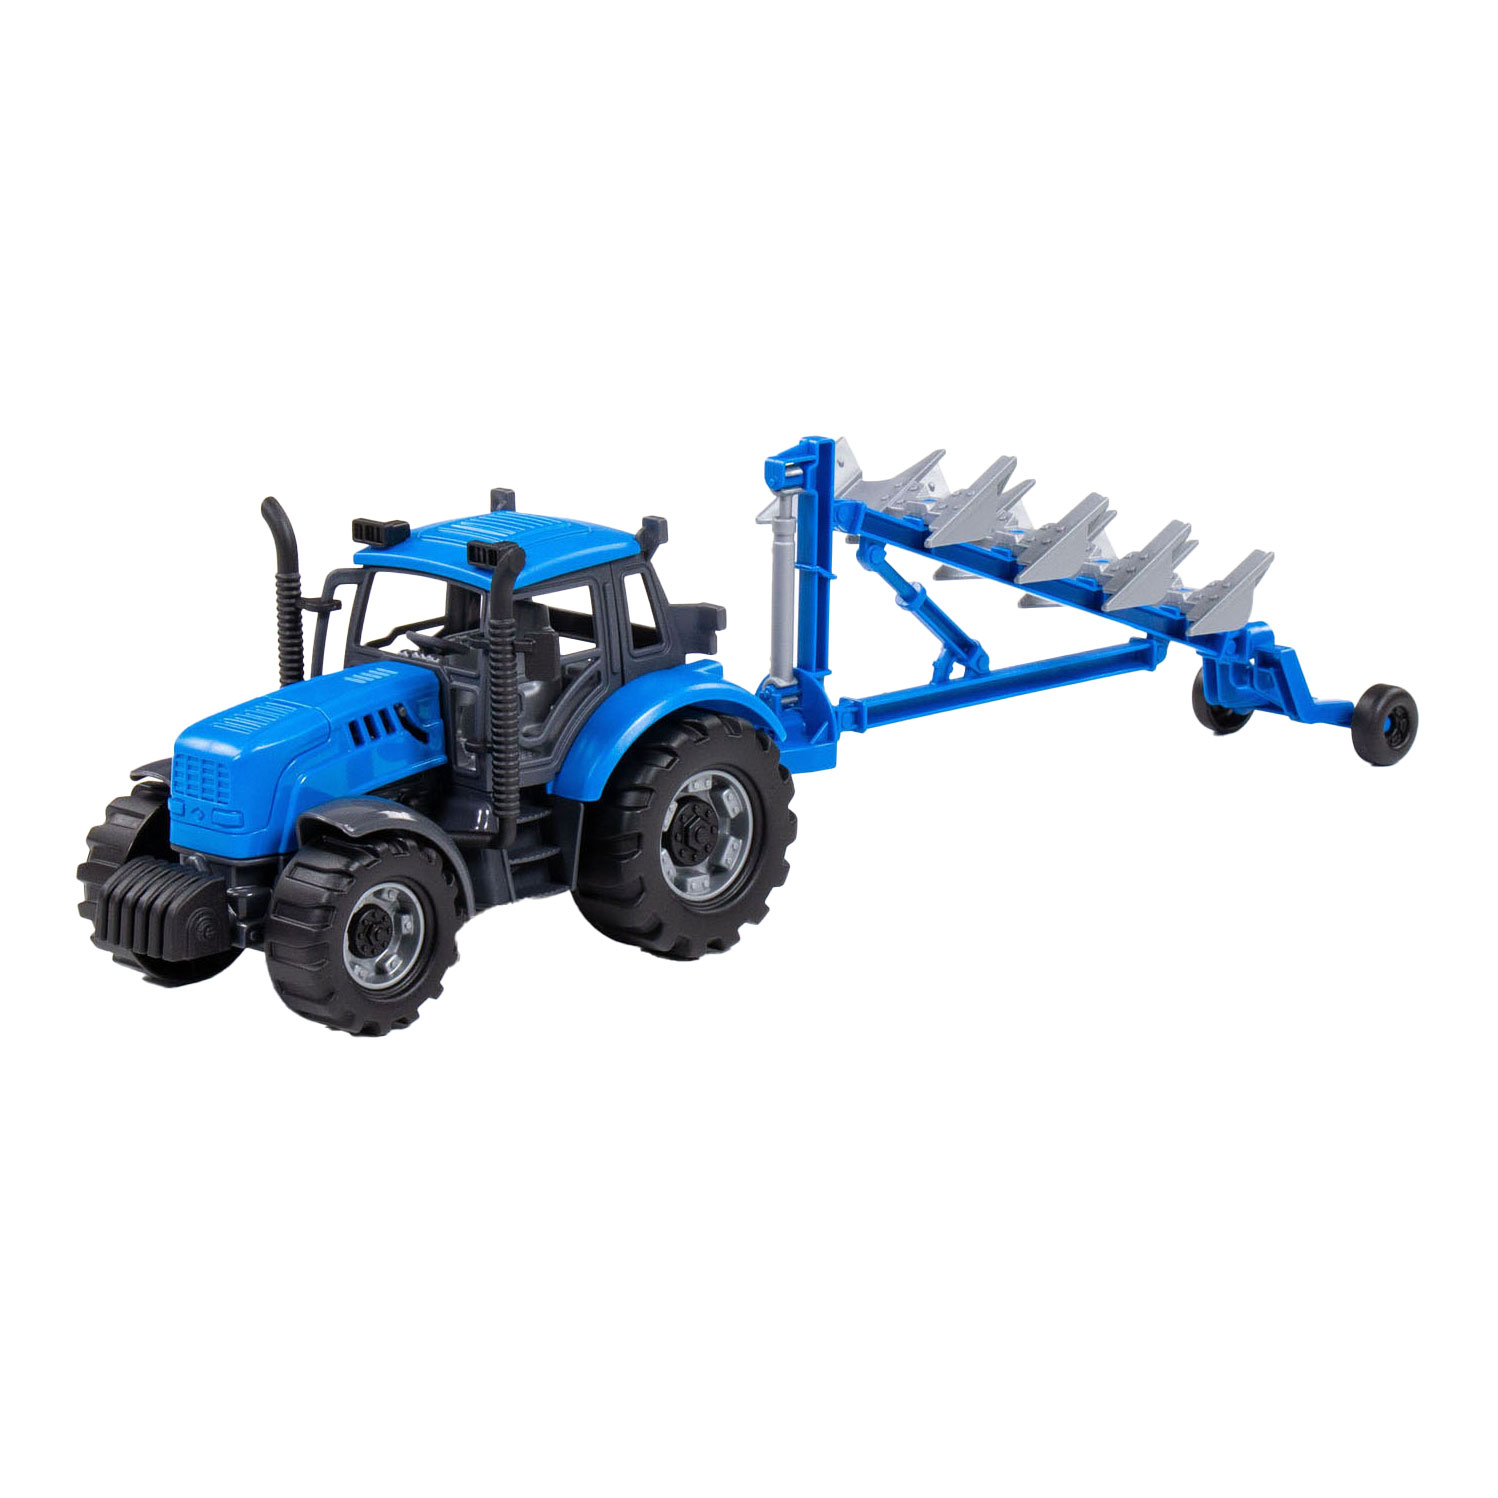 Cavallino Traktor mit Pflug Blau, Maßstab 1:32